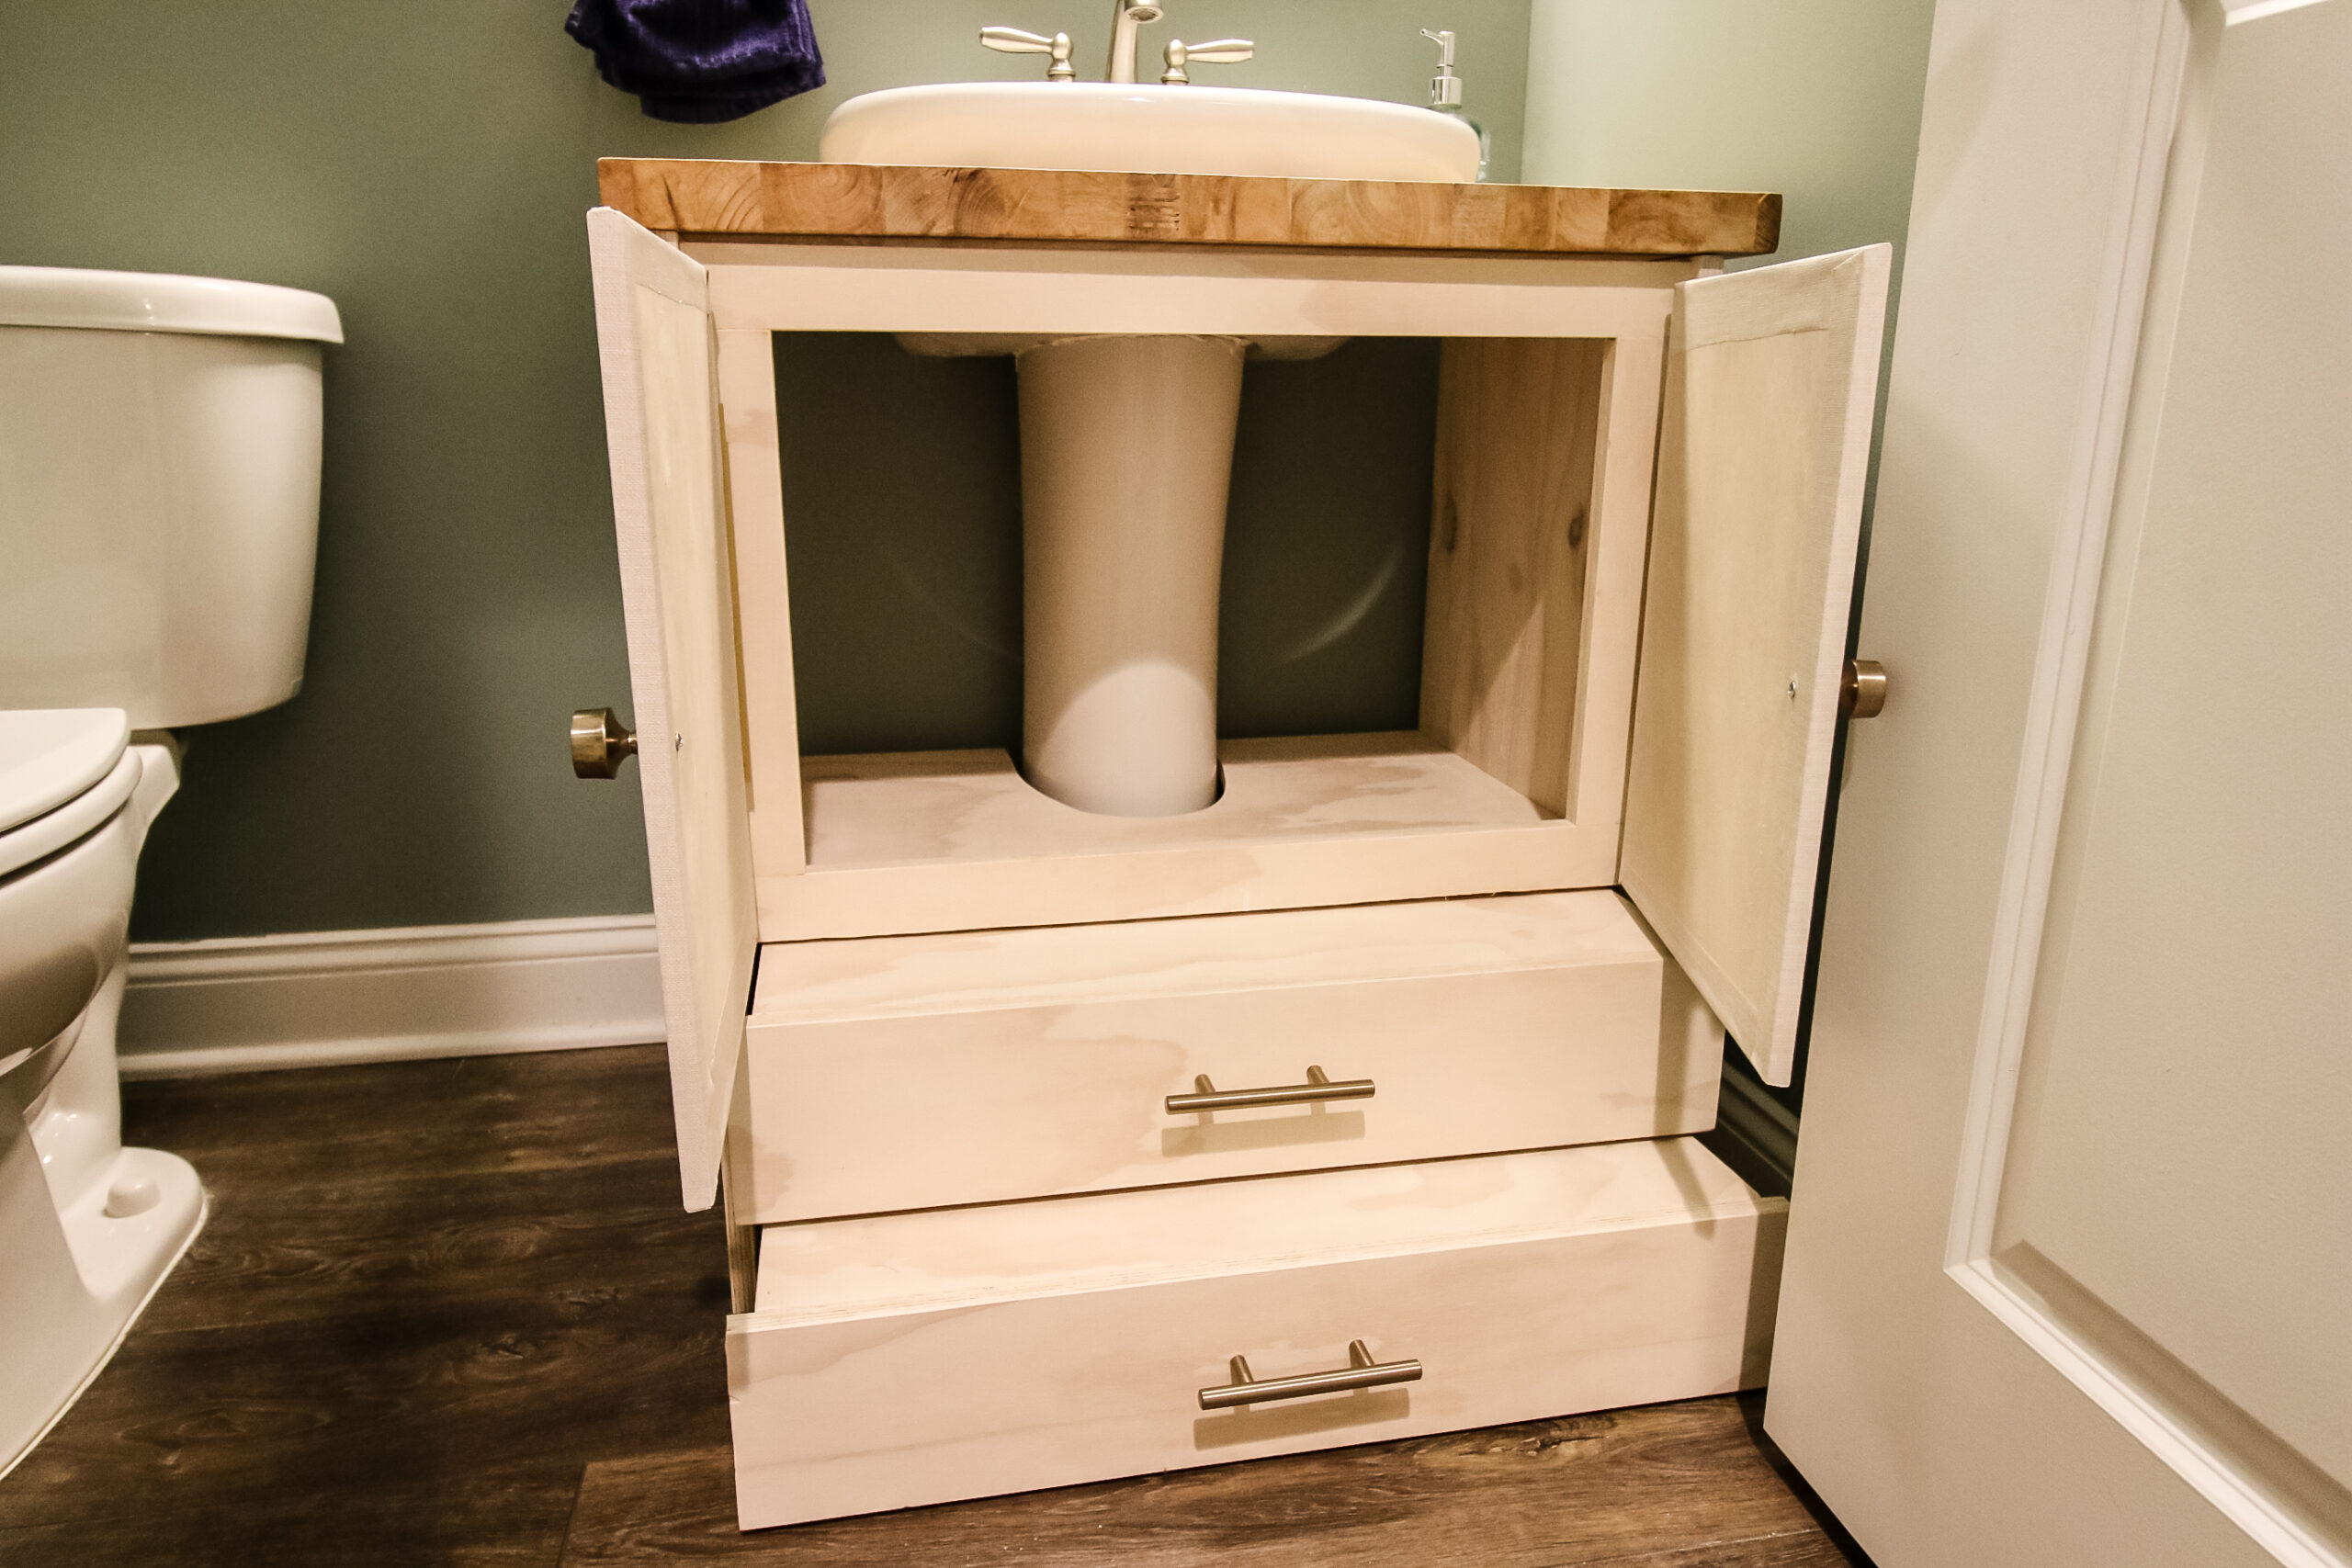 Pedestal Sink Storage Solutions - Unique Vanities